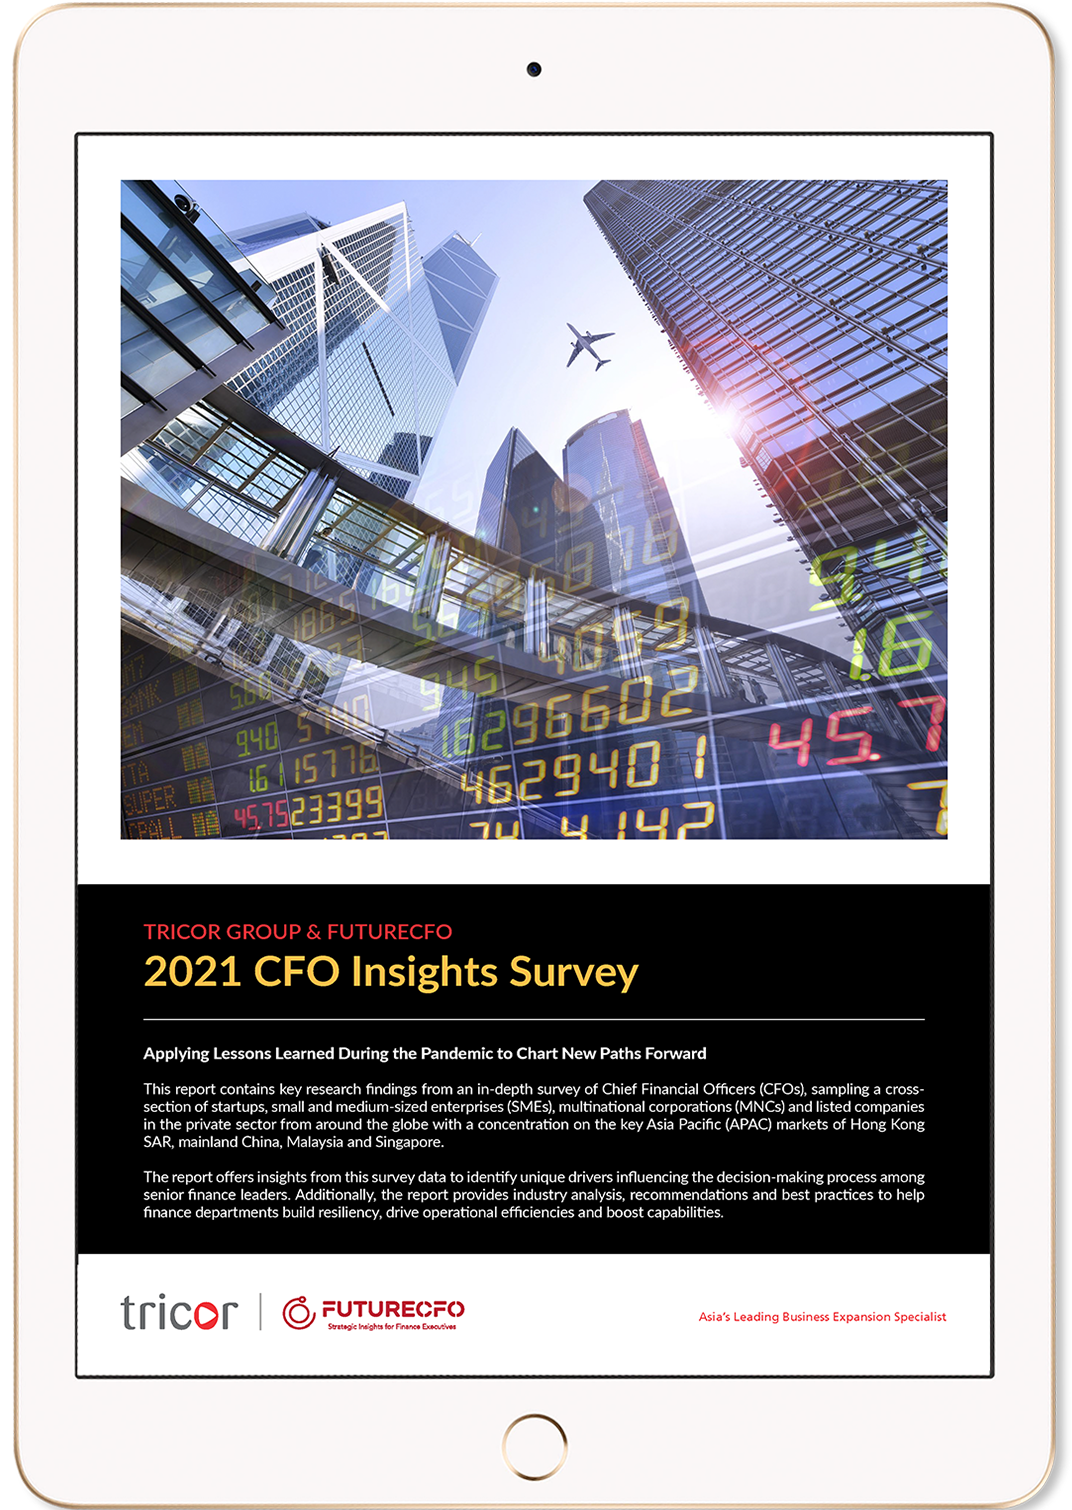 2021 CFO Insights Survey Report